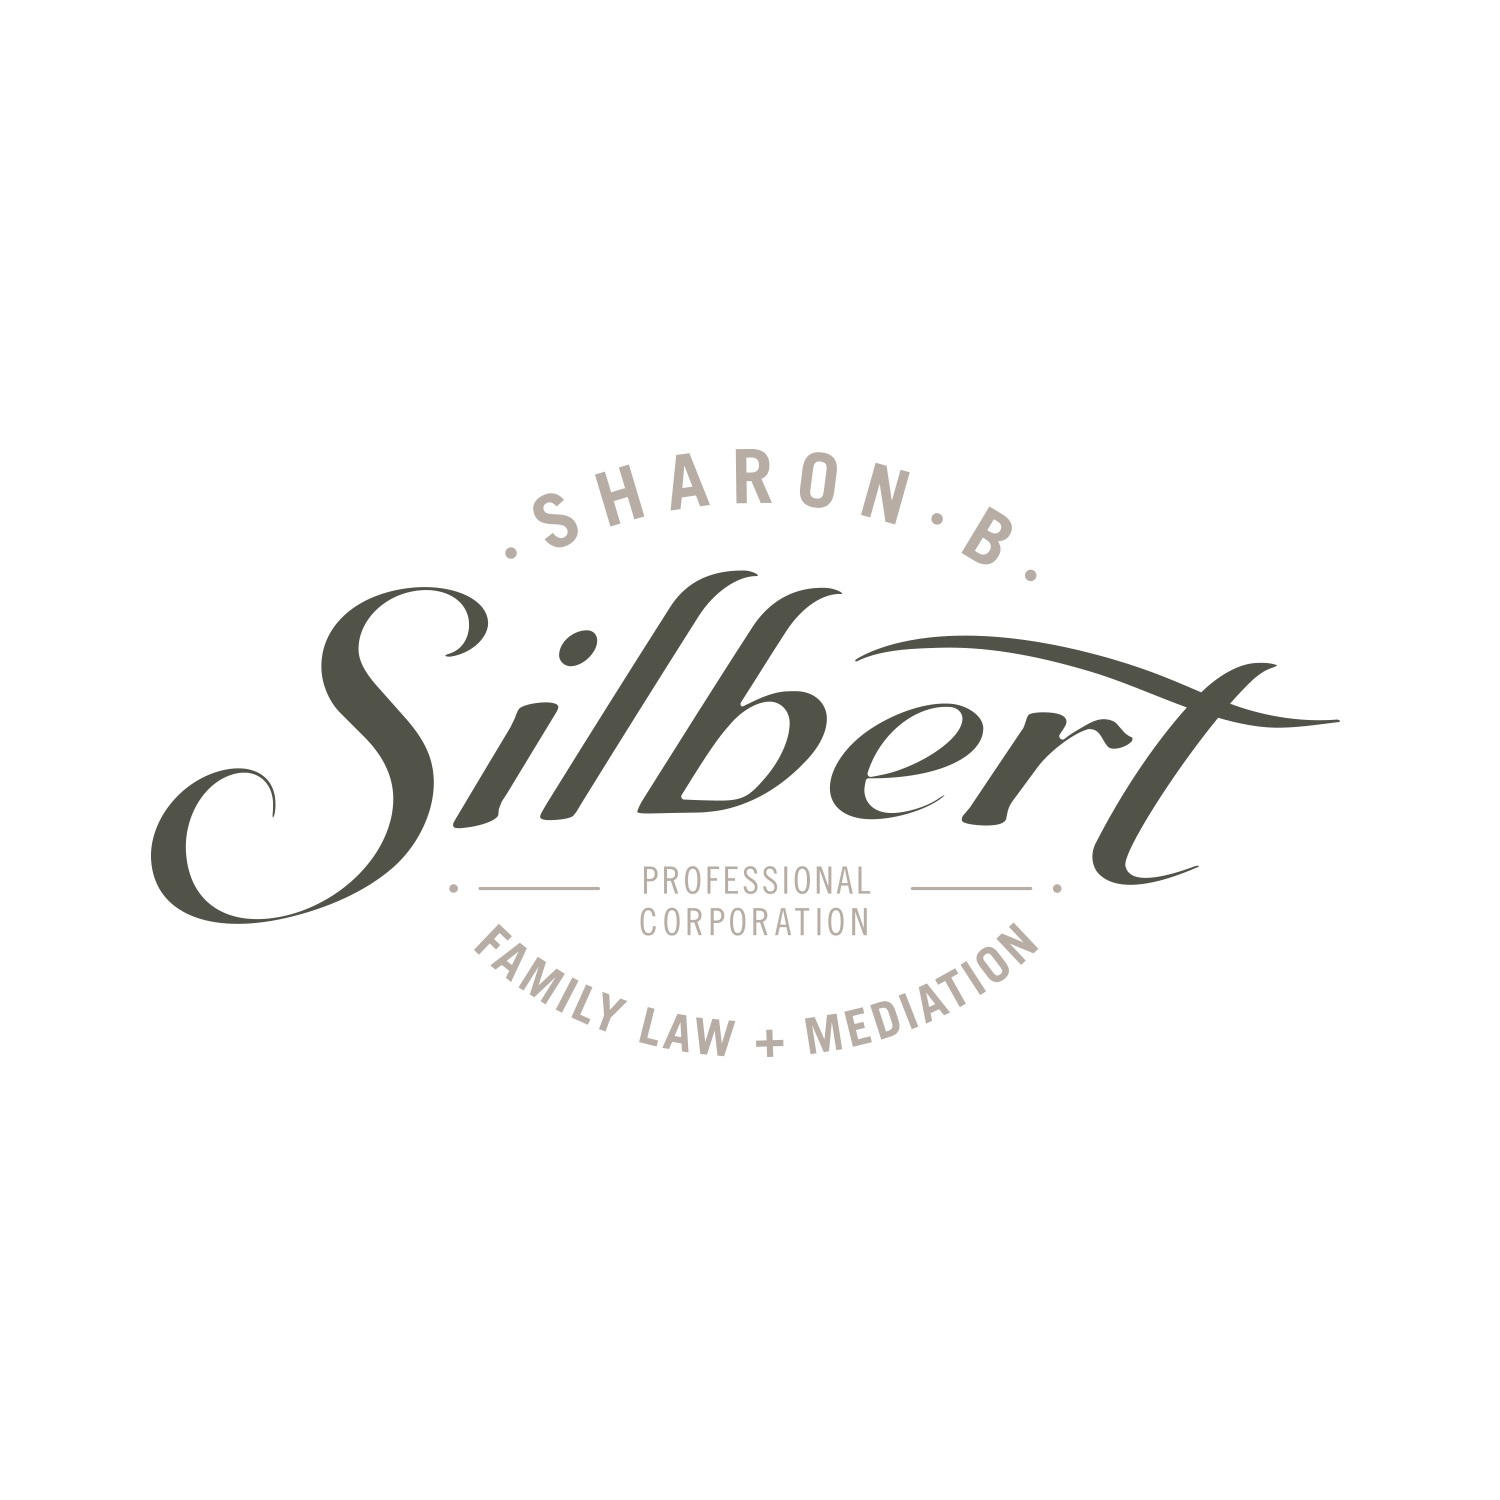 Sharon B. Silbert Professional Corporation Family Law + Mediation